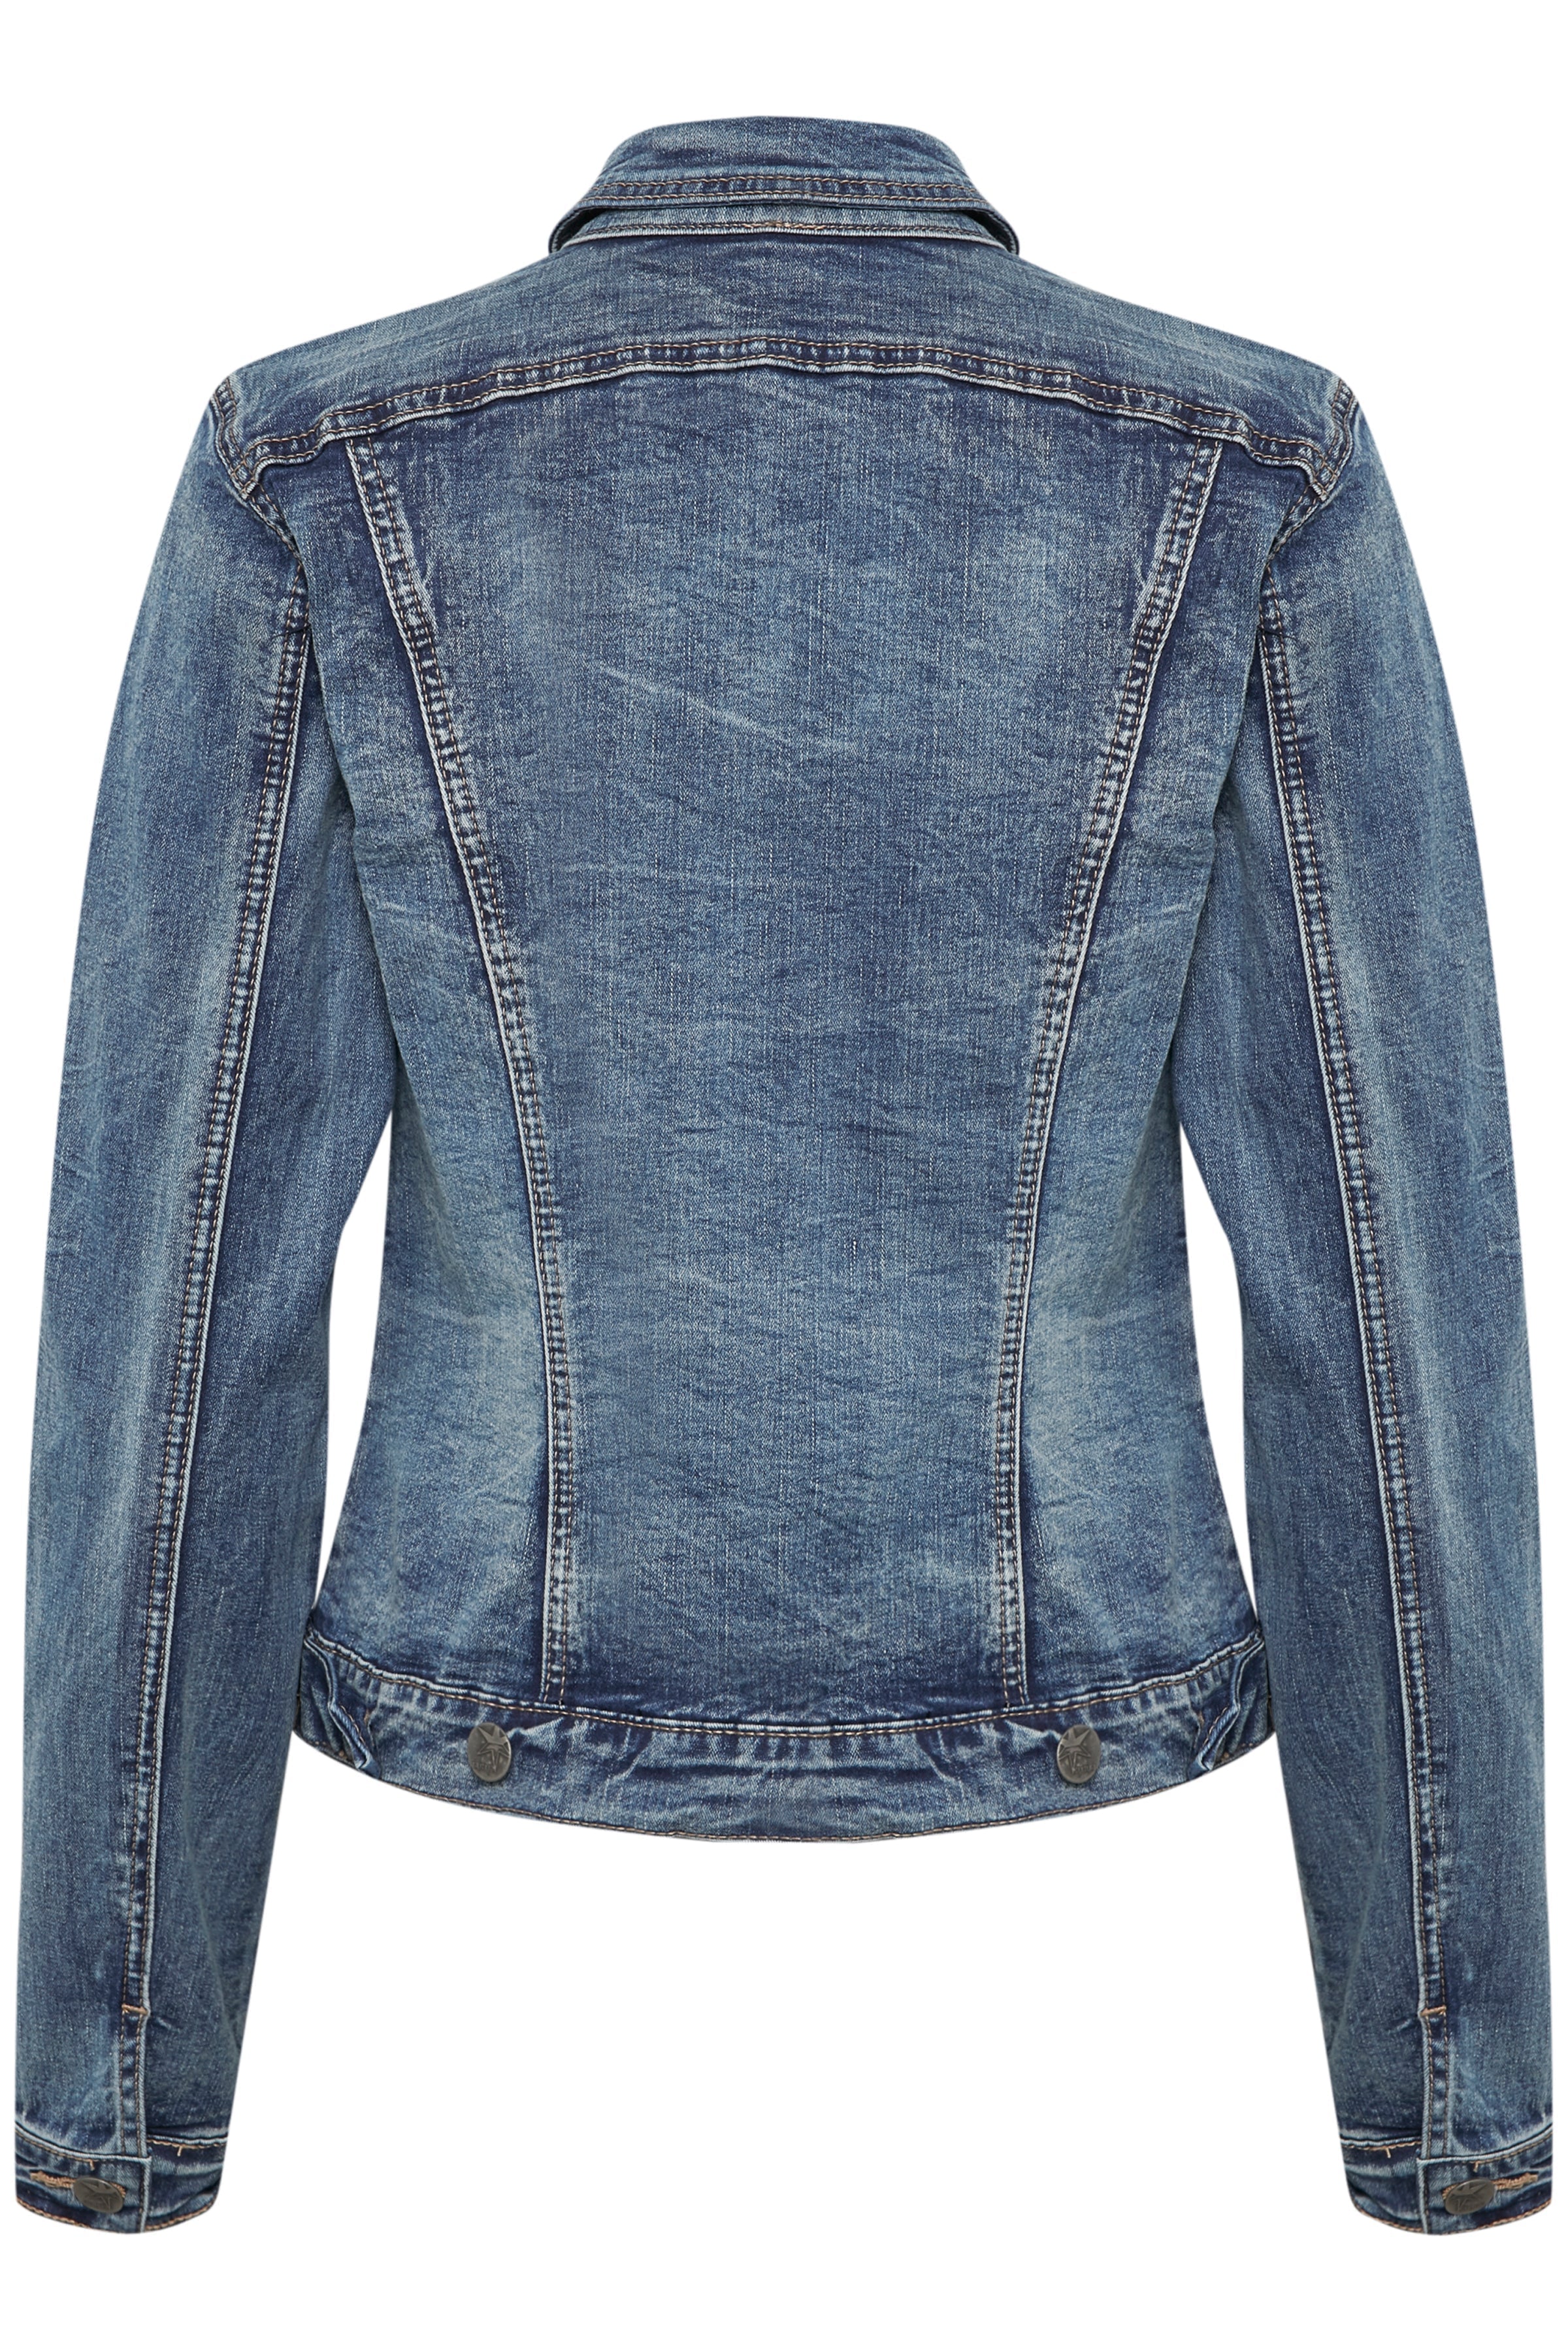 Culture CUalis denim jacket blue wash - Online-Mode